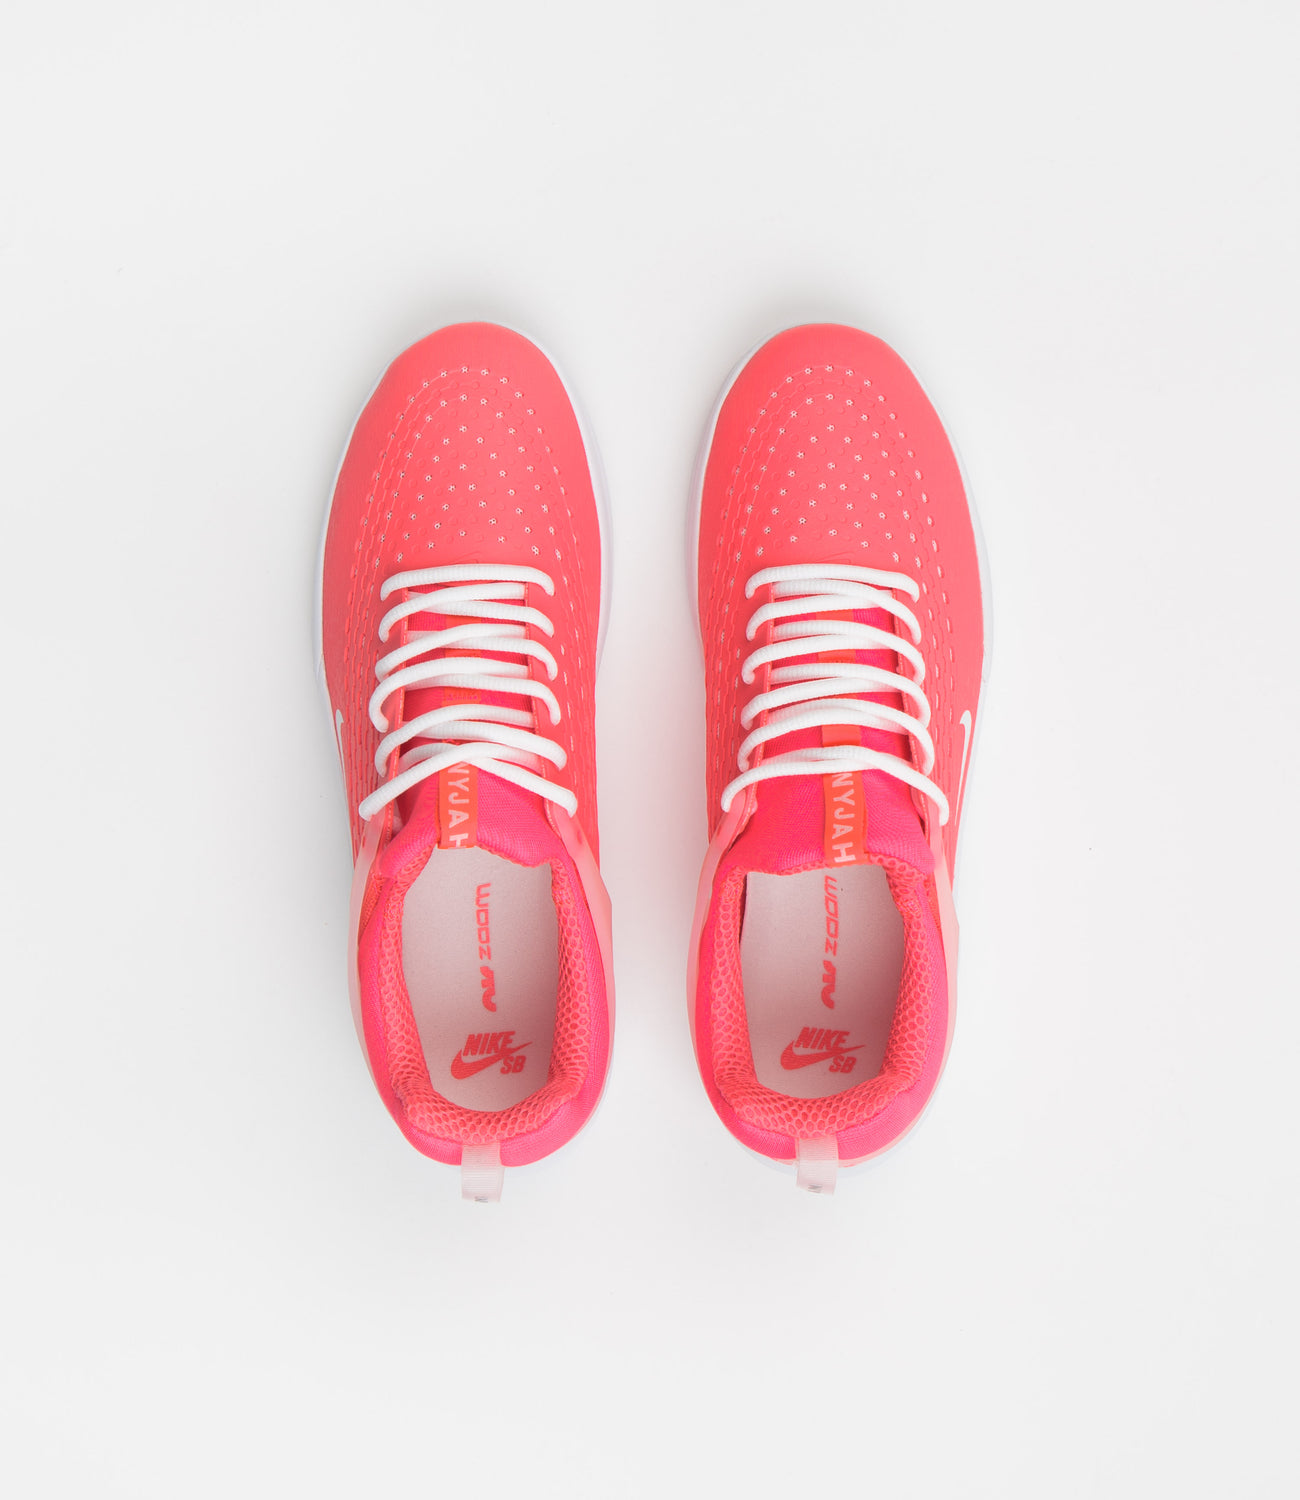 Nike SB Nyjah 3 Shoes Hot Punch / White - Hot Punch - Hot Punch | Flatspot